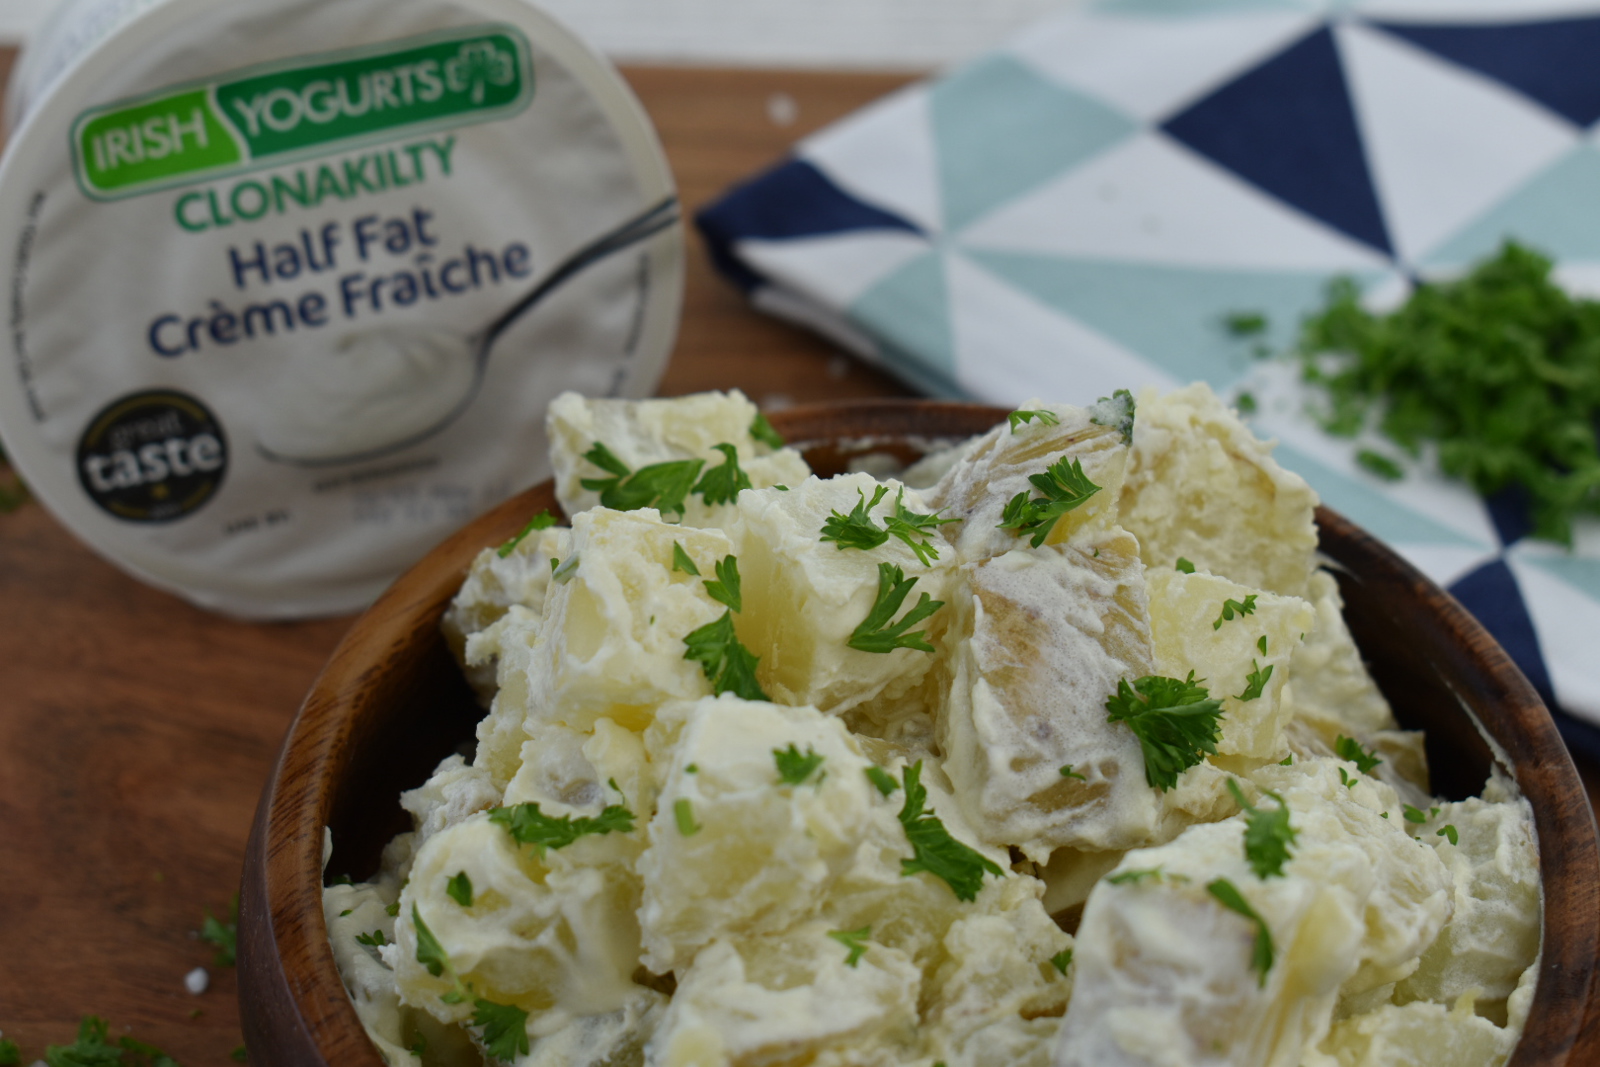 Potato Salad - Irish Yogurts Clonakilty – Try A Spoonful Of Delicious